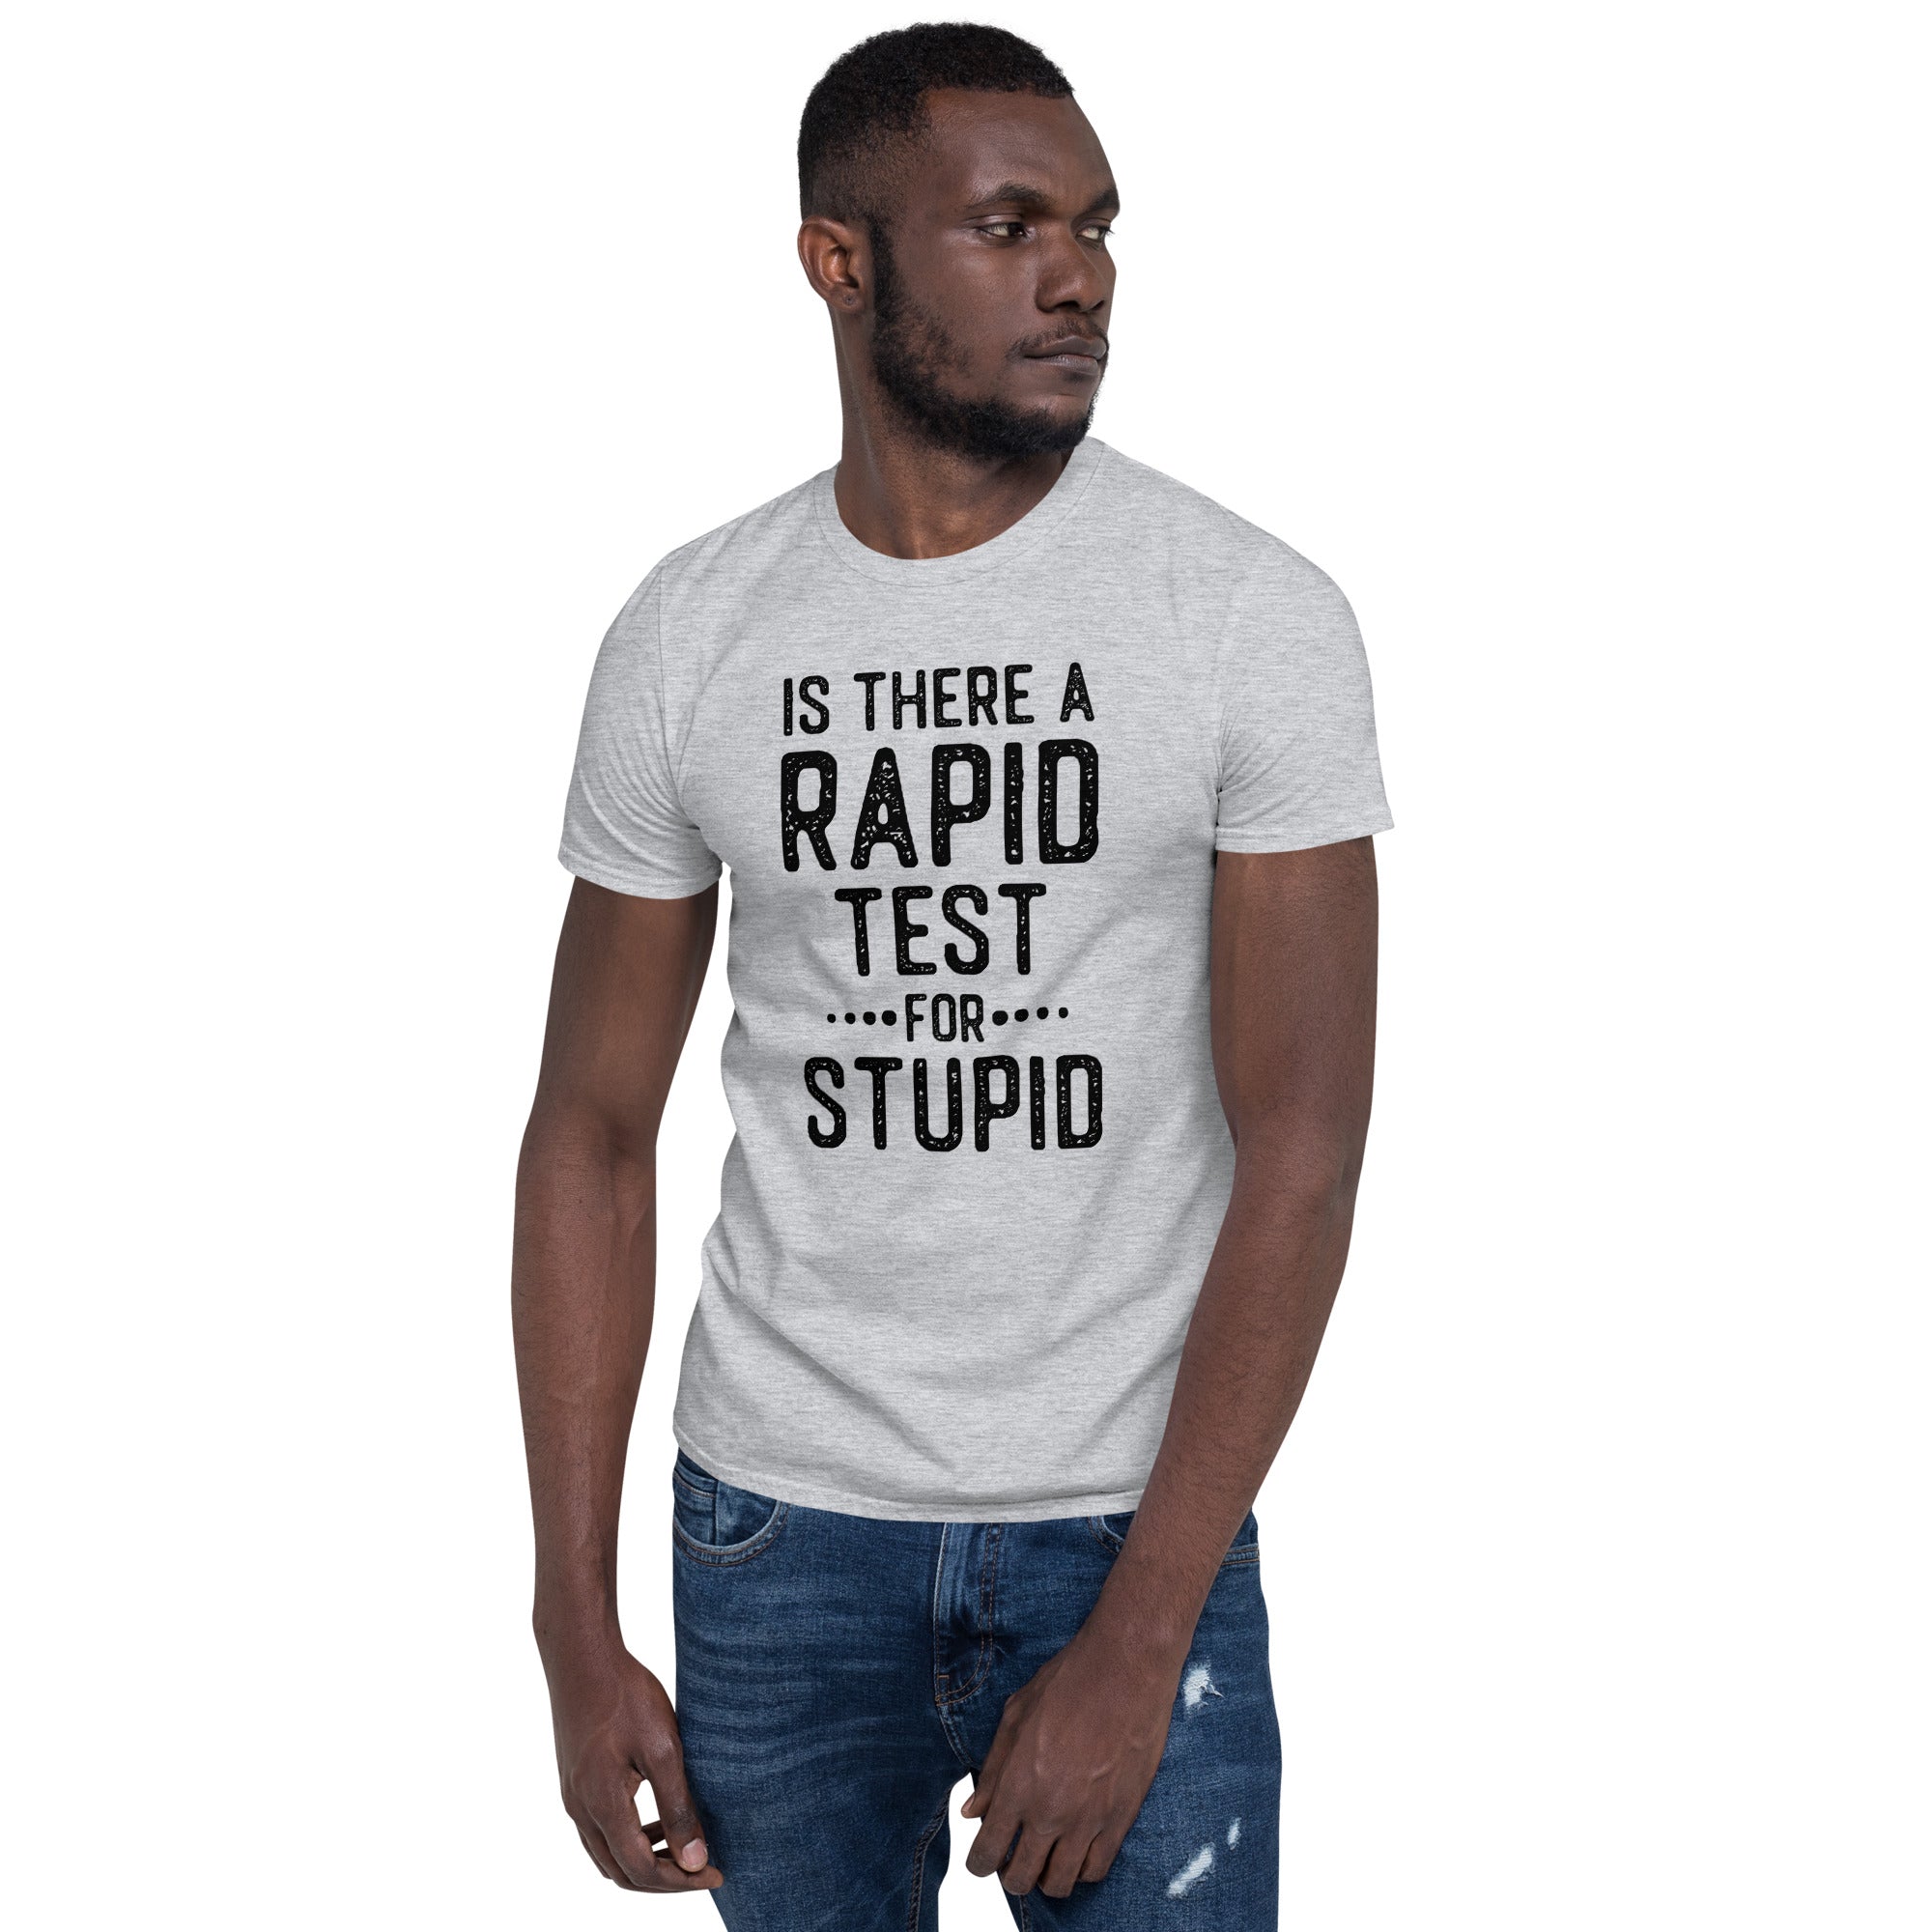 Rapid Test For Stupid - Short-Sleeve Unisex T-Shirt